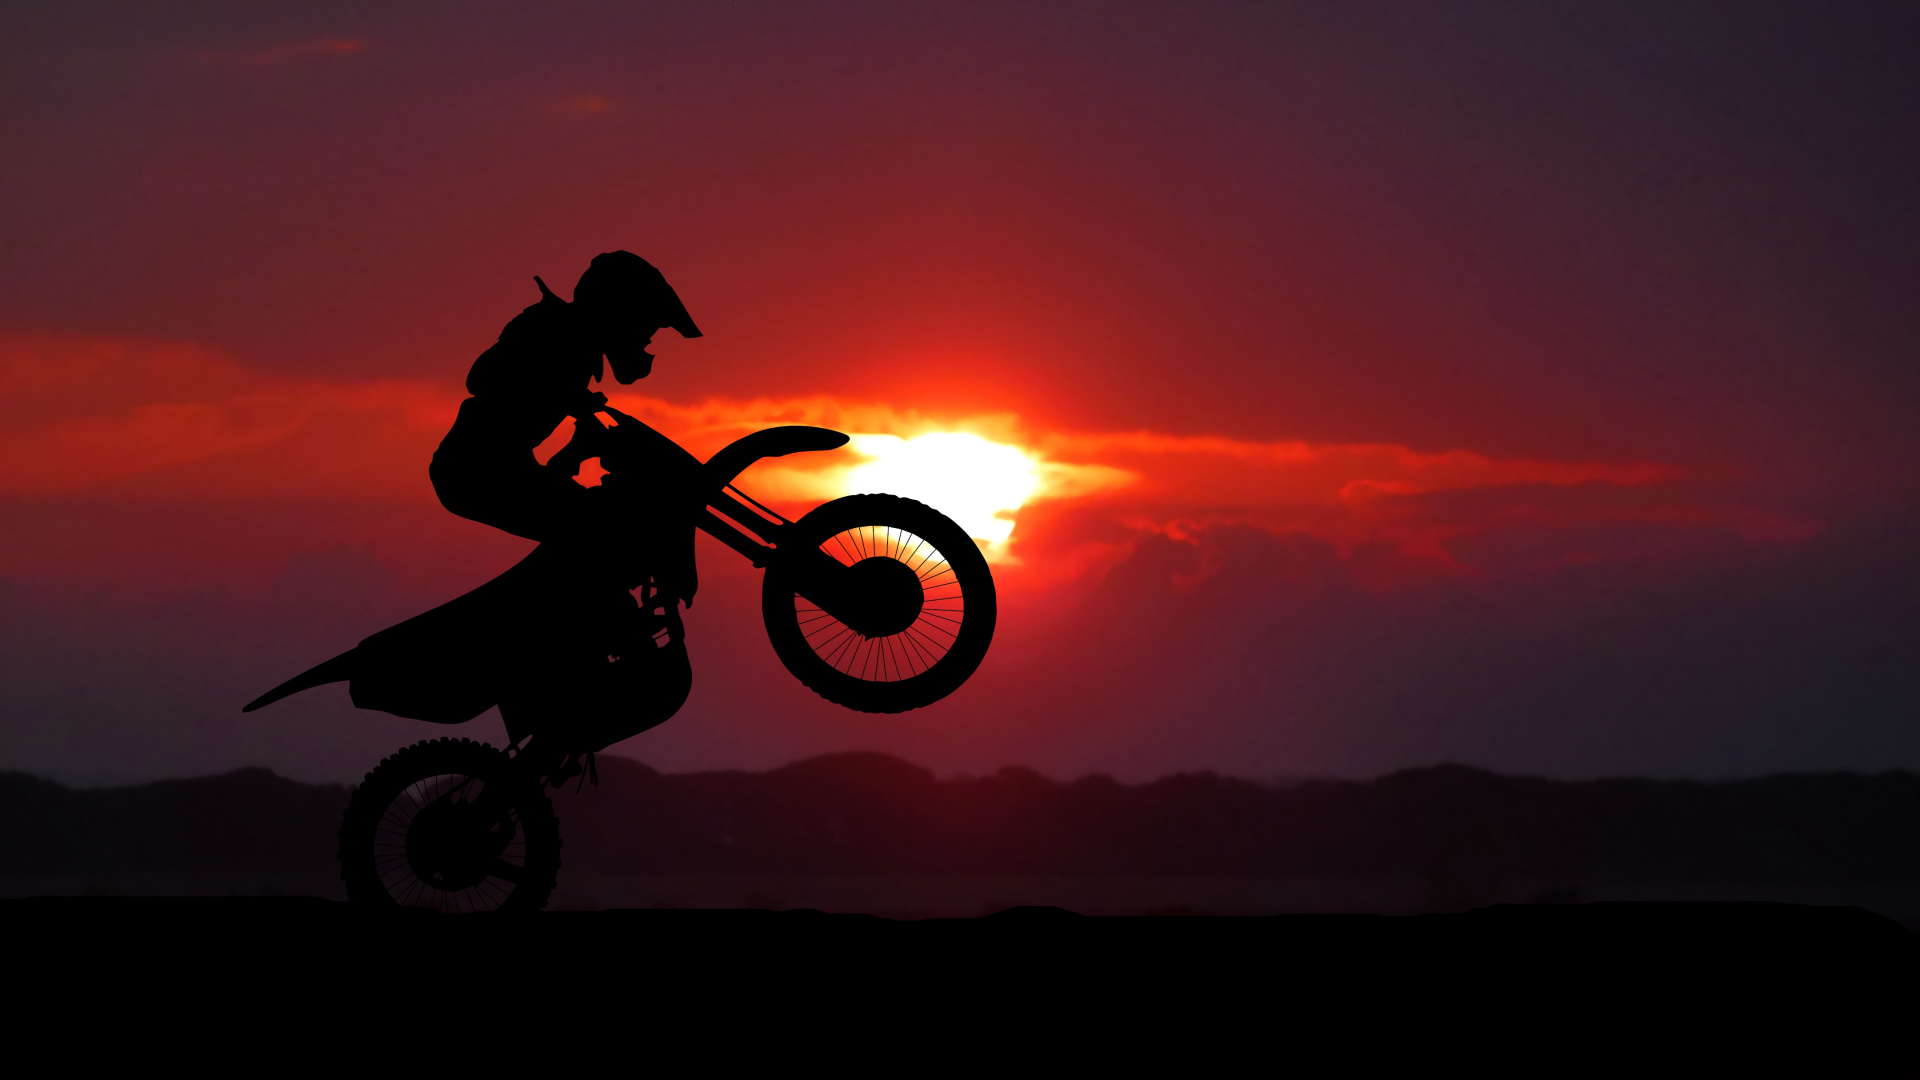 Silhouette of Man Riding Motocross Dirt Bike During Sunset. Wallpaper in 1920x1080 Resolution